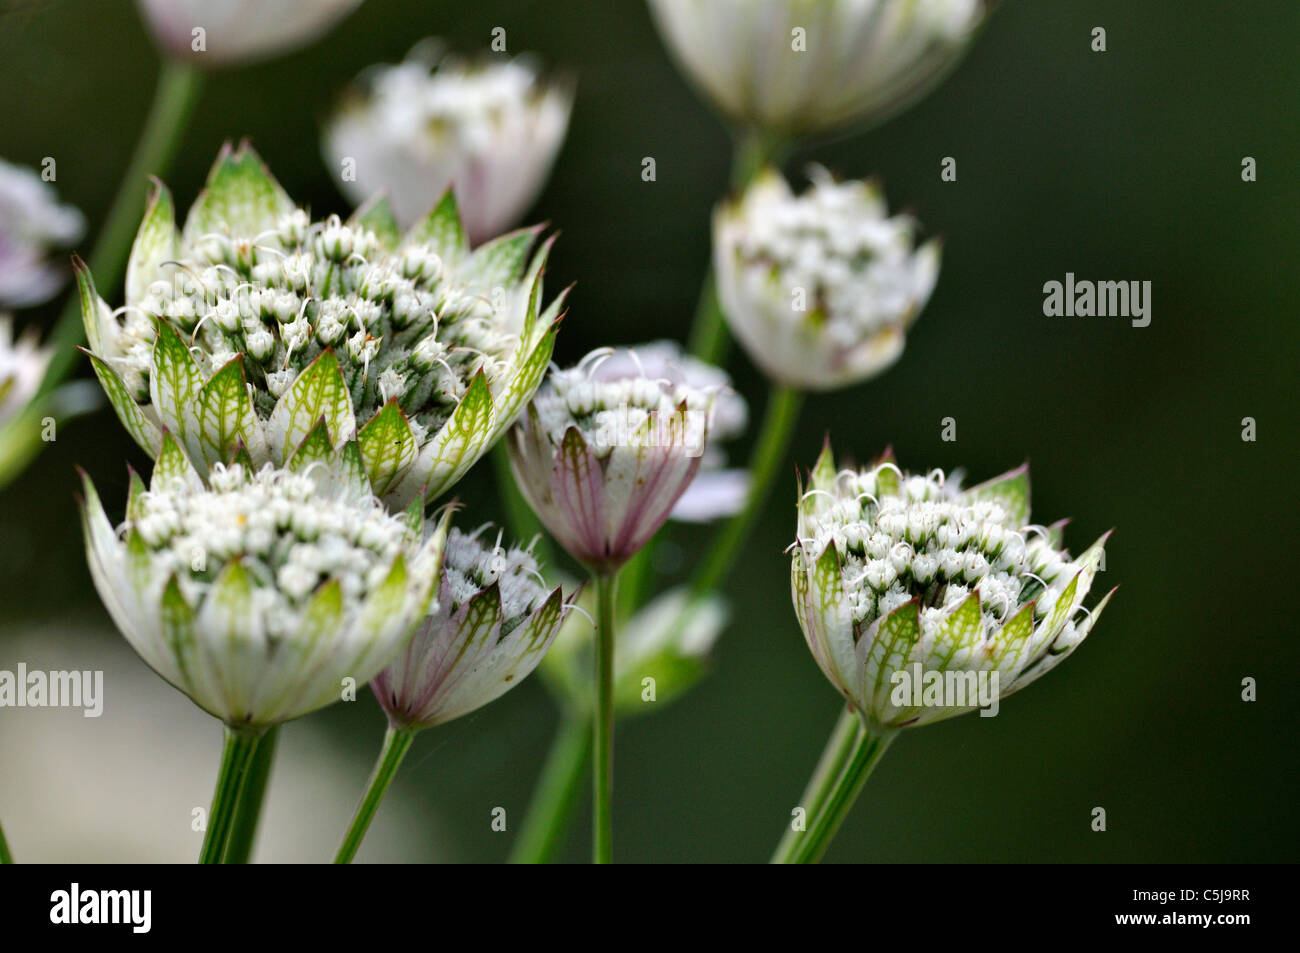 Close-up of astrantia flowerheads Astrantia Major in a summer garden. Stock Photo